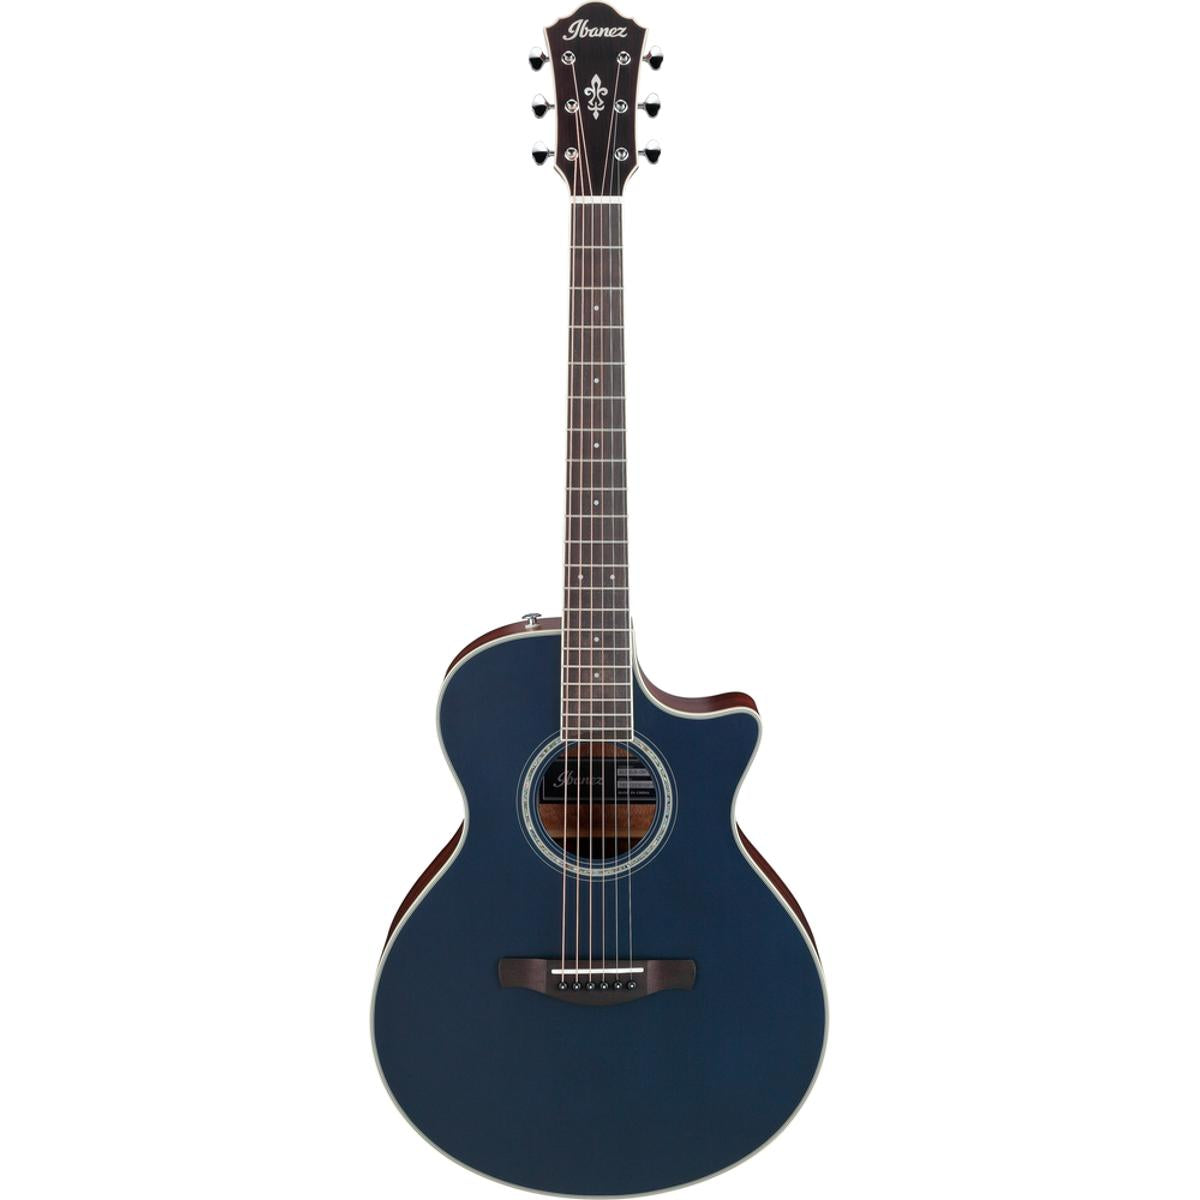 Ibanez AE200JRDBF Acoustic Guitar Dark Tide Blue Flat w/ Pickup & Cutaway